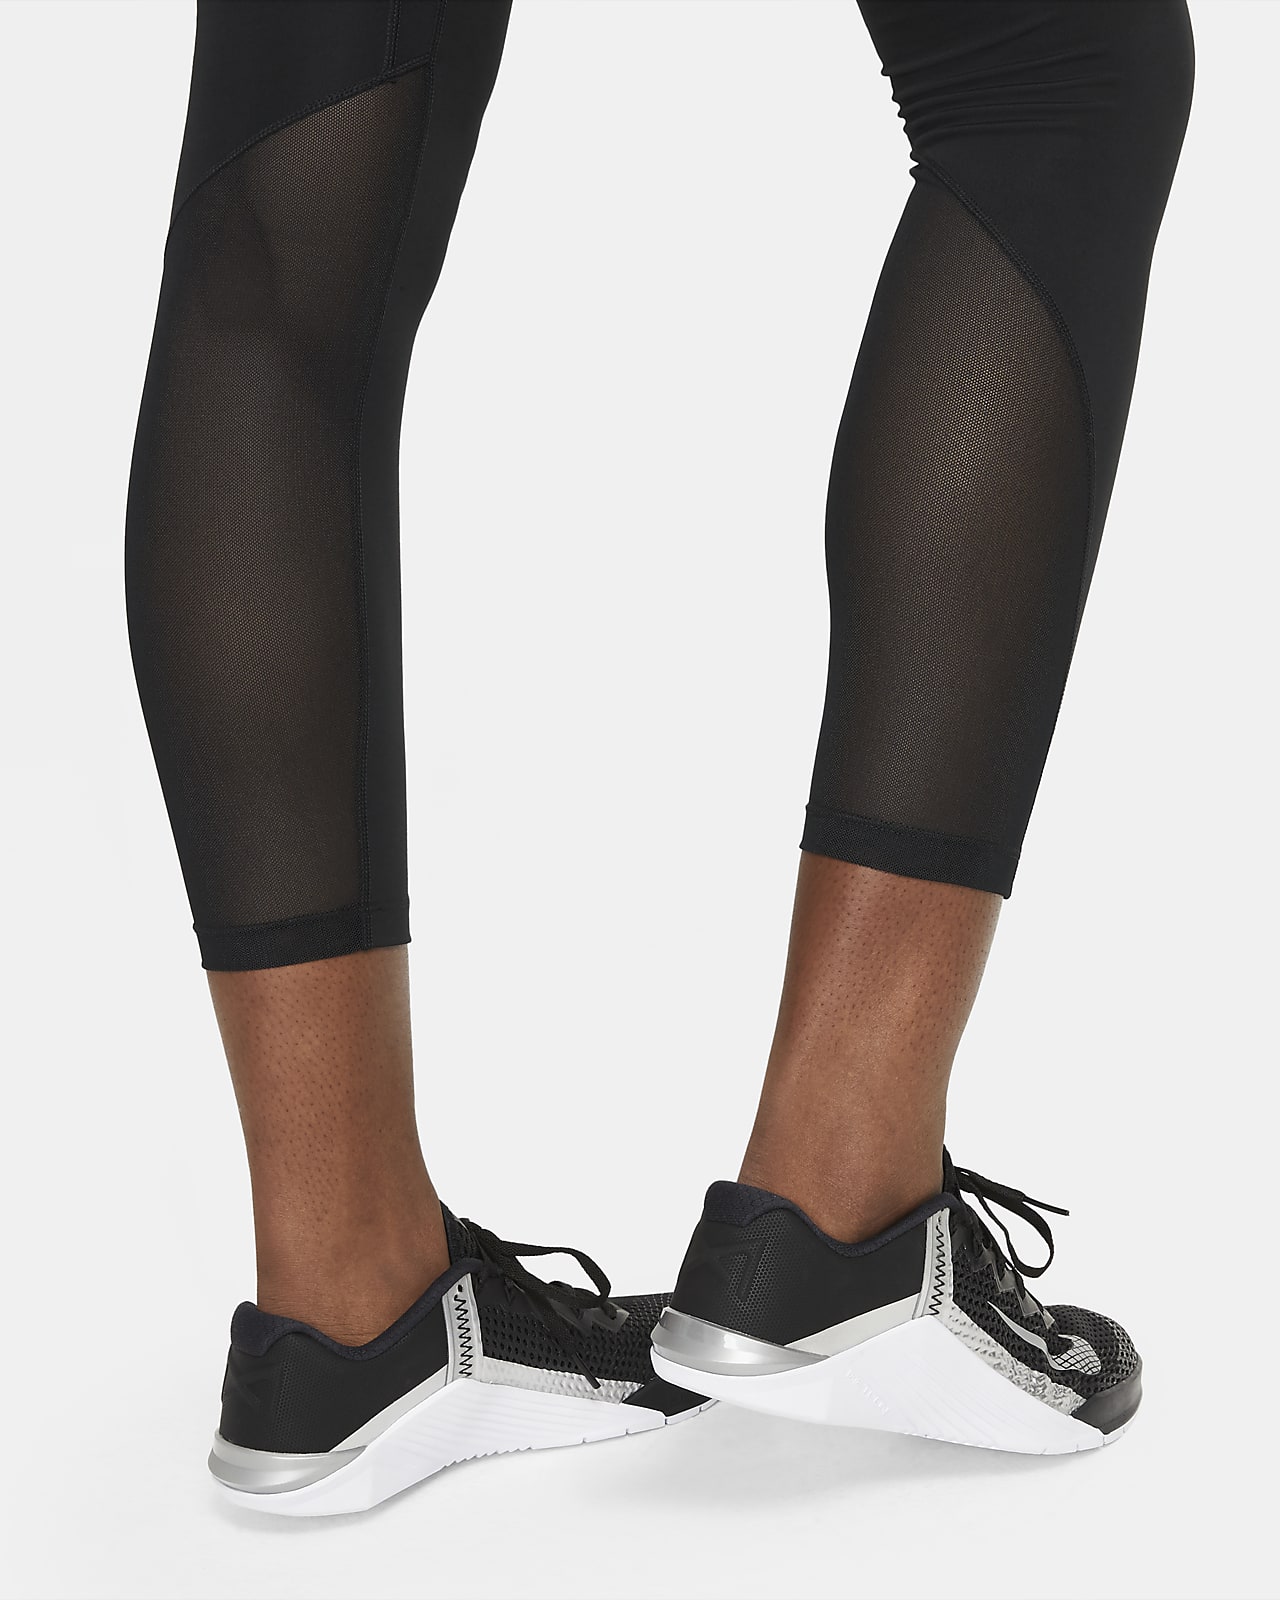 Nike Pro Leggings de talle medio con paneles de malla - Mujer. Nike ES